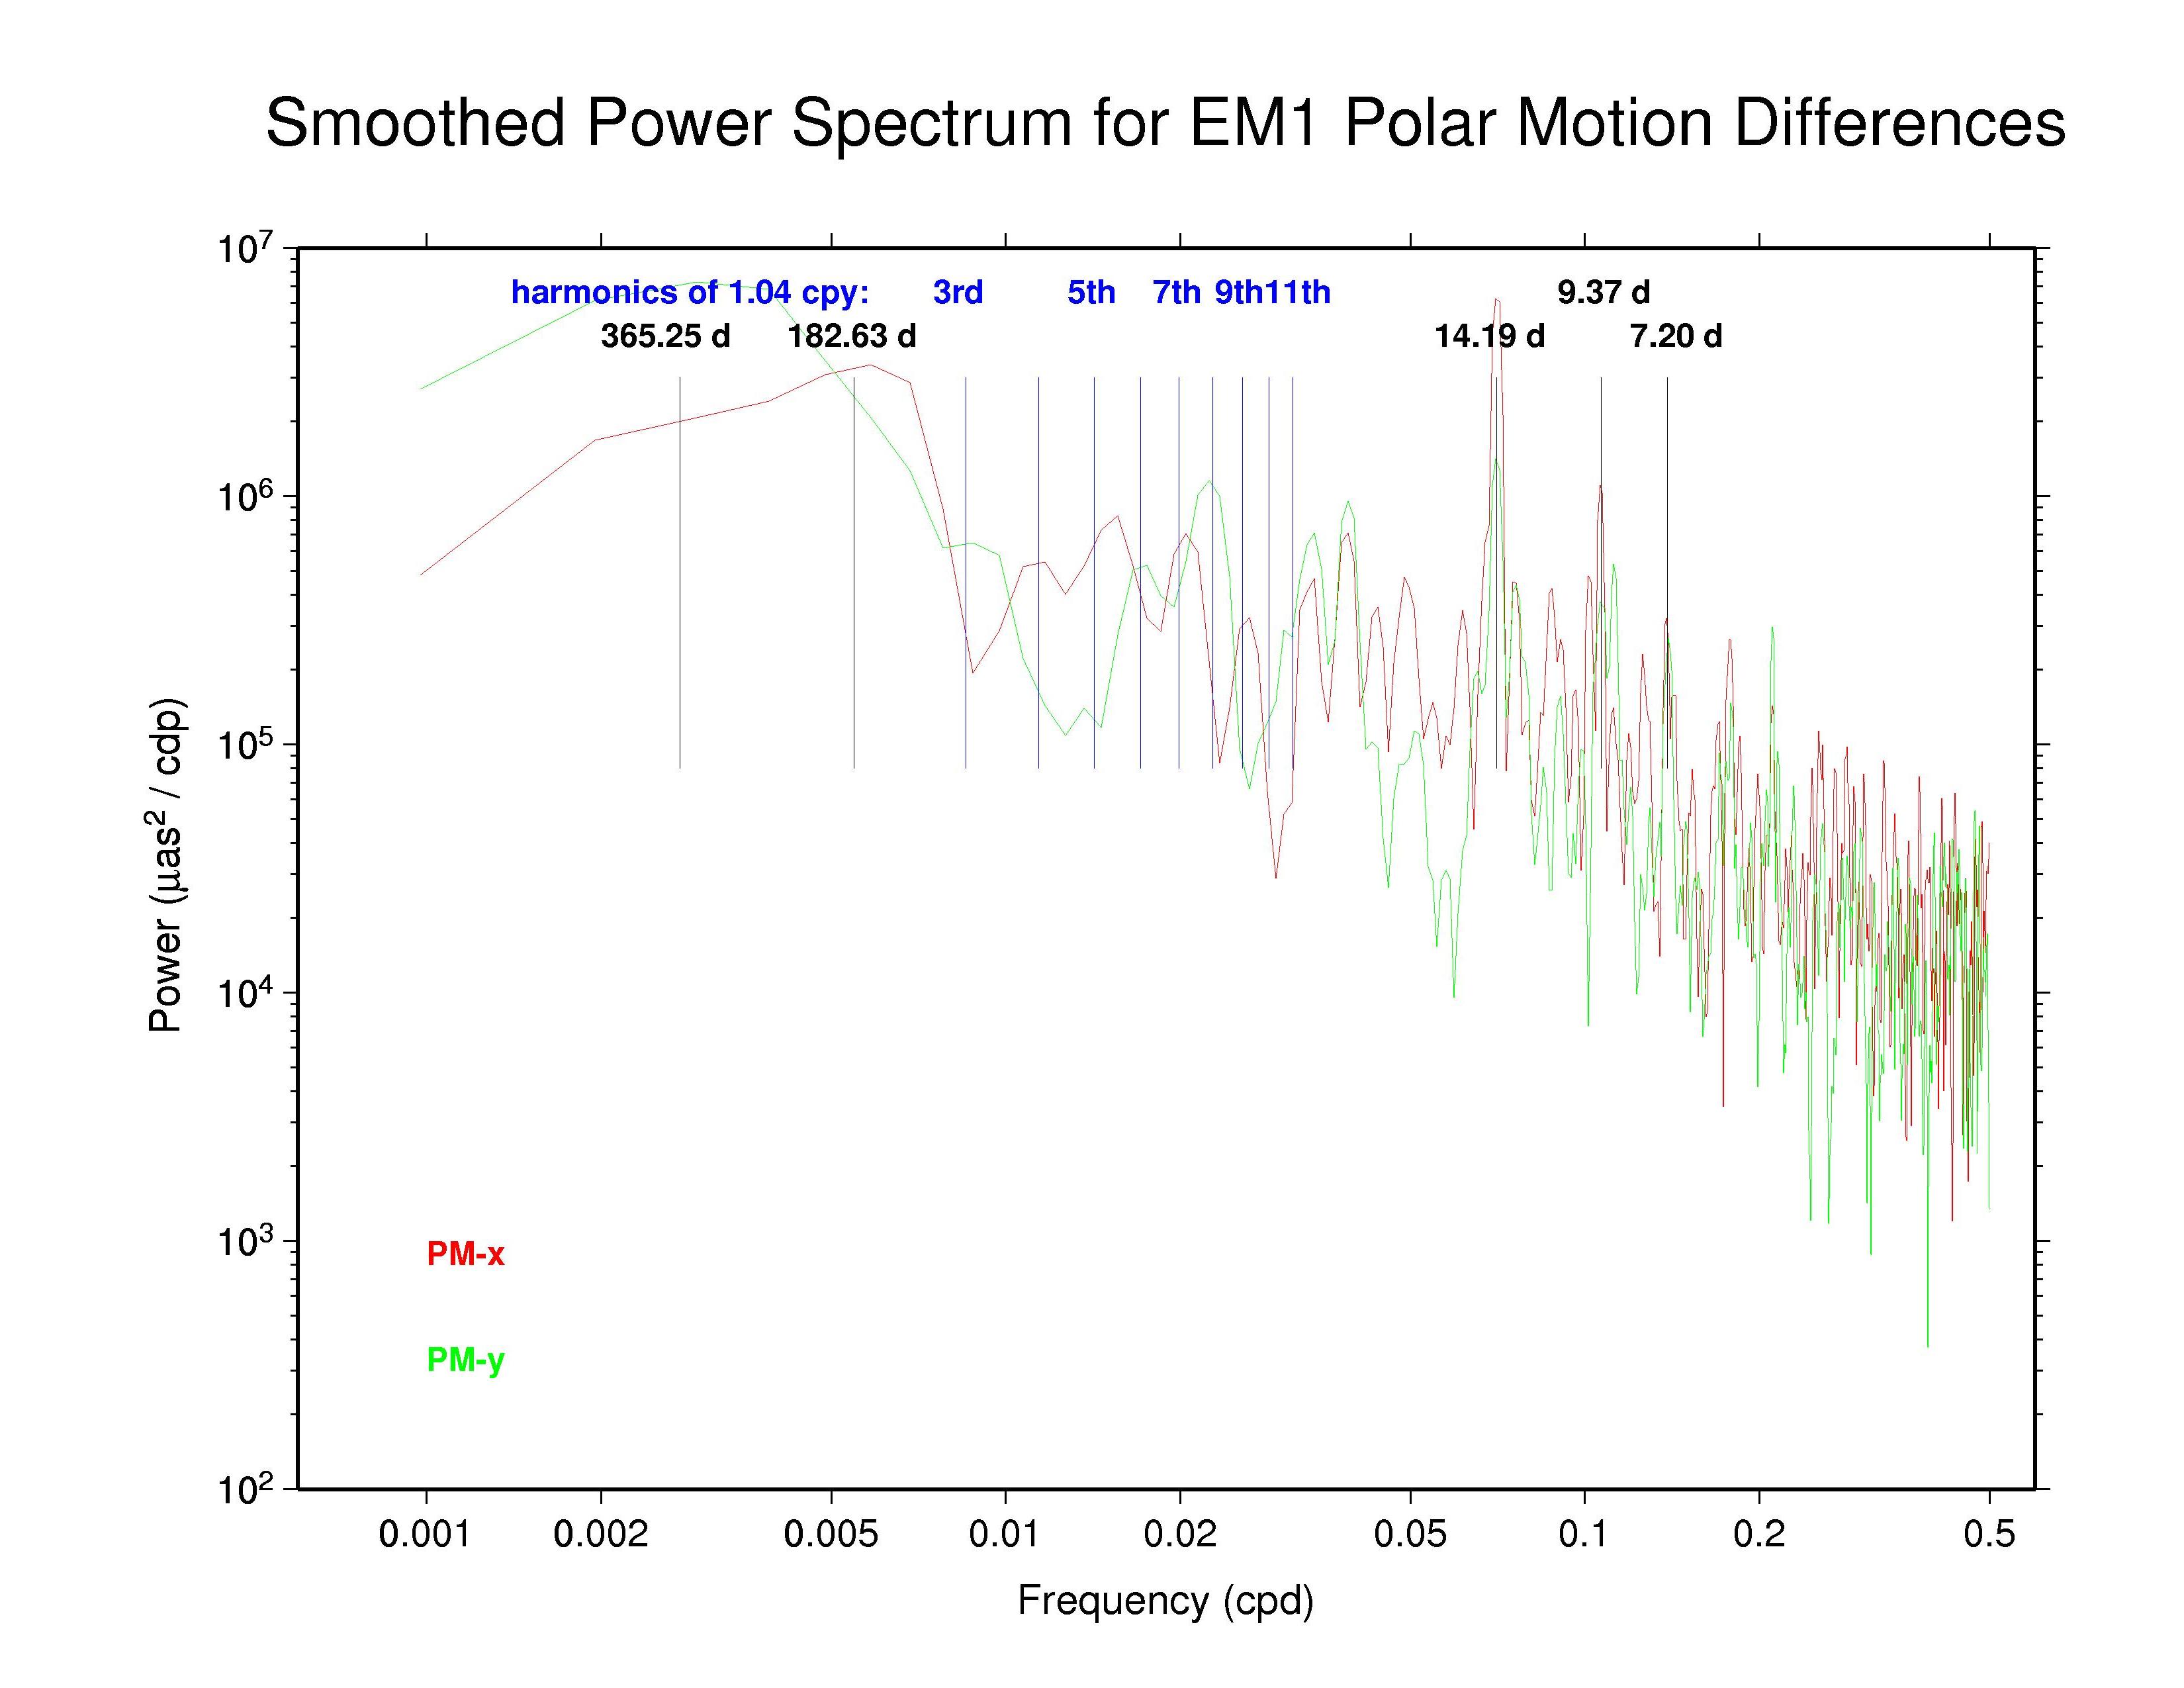 EMR polar motion discontinuitiesdiscontinuities